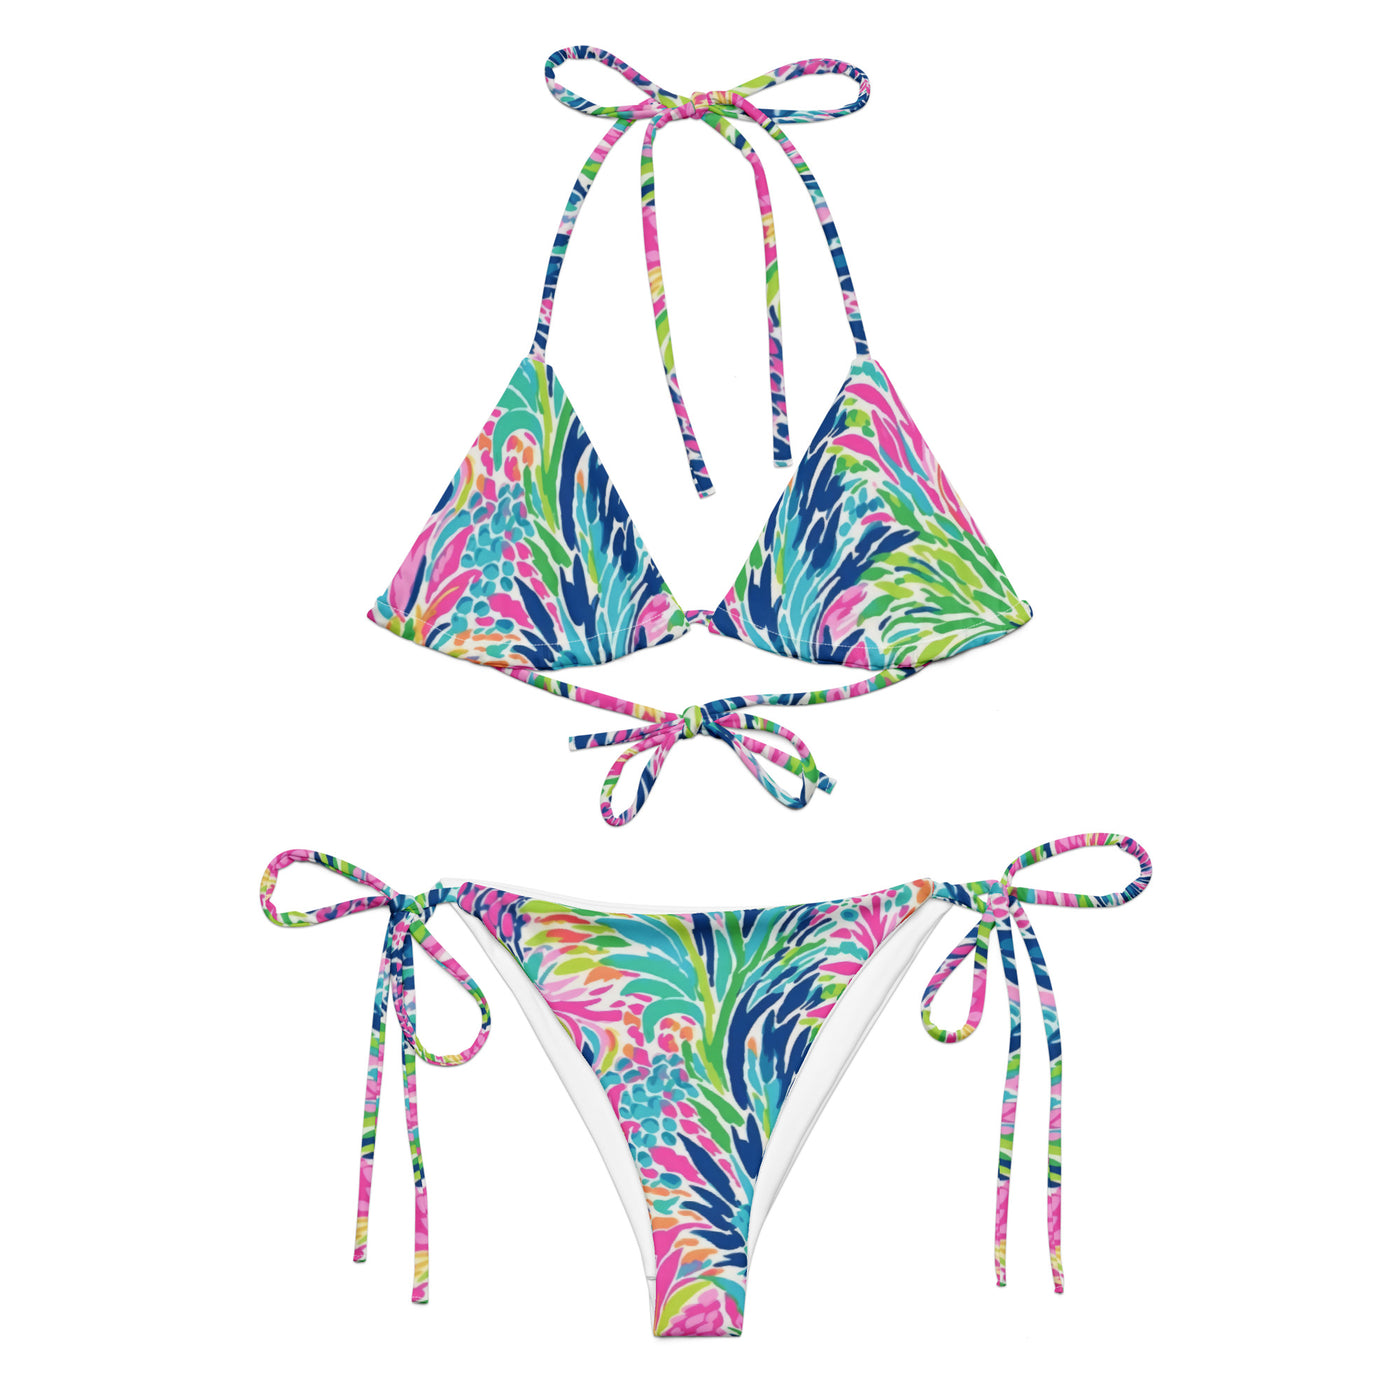 South Port Bikini - Coastal Cool - Swimwear and Beachwear - Recycled fabrics